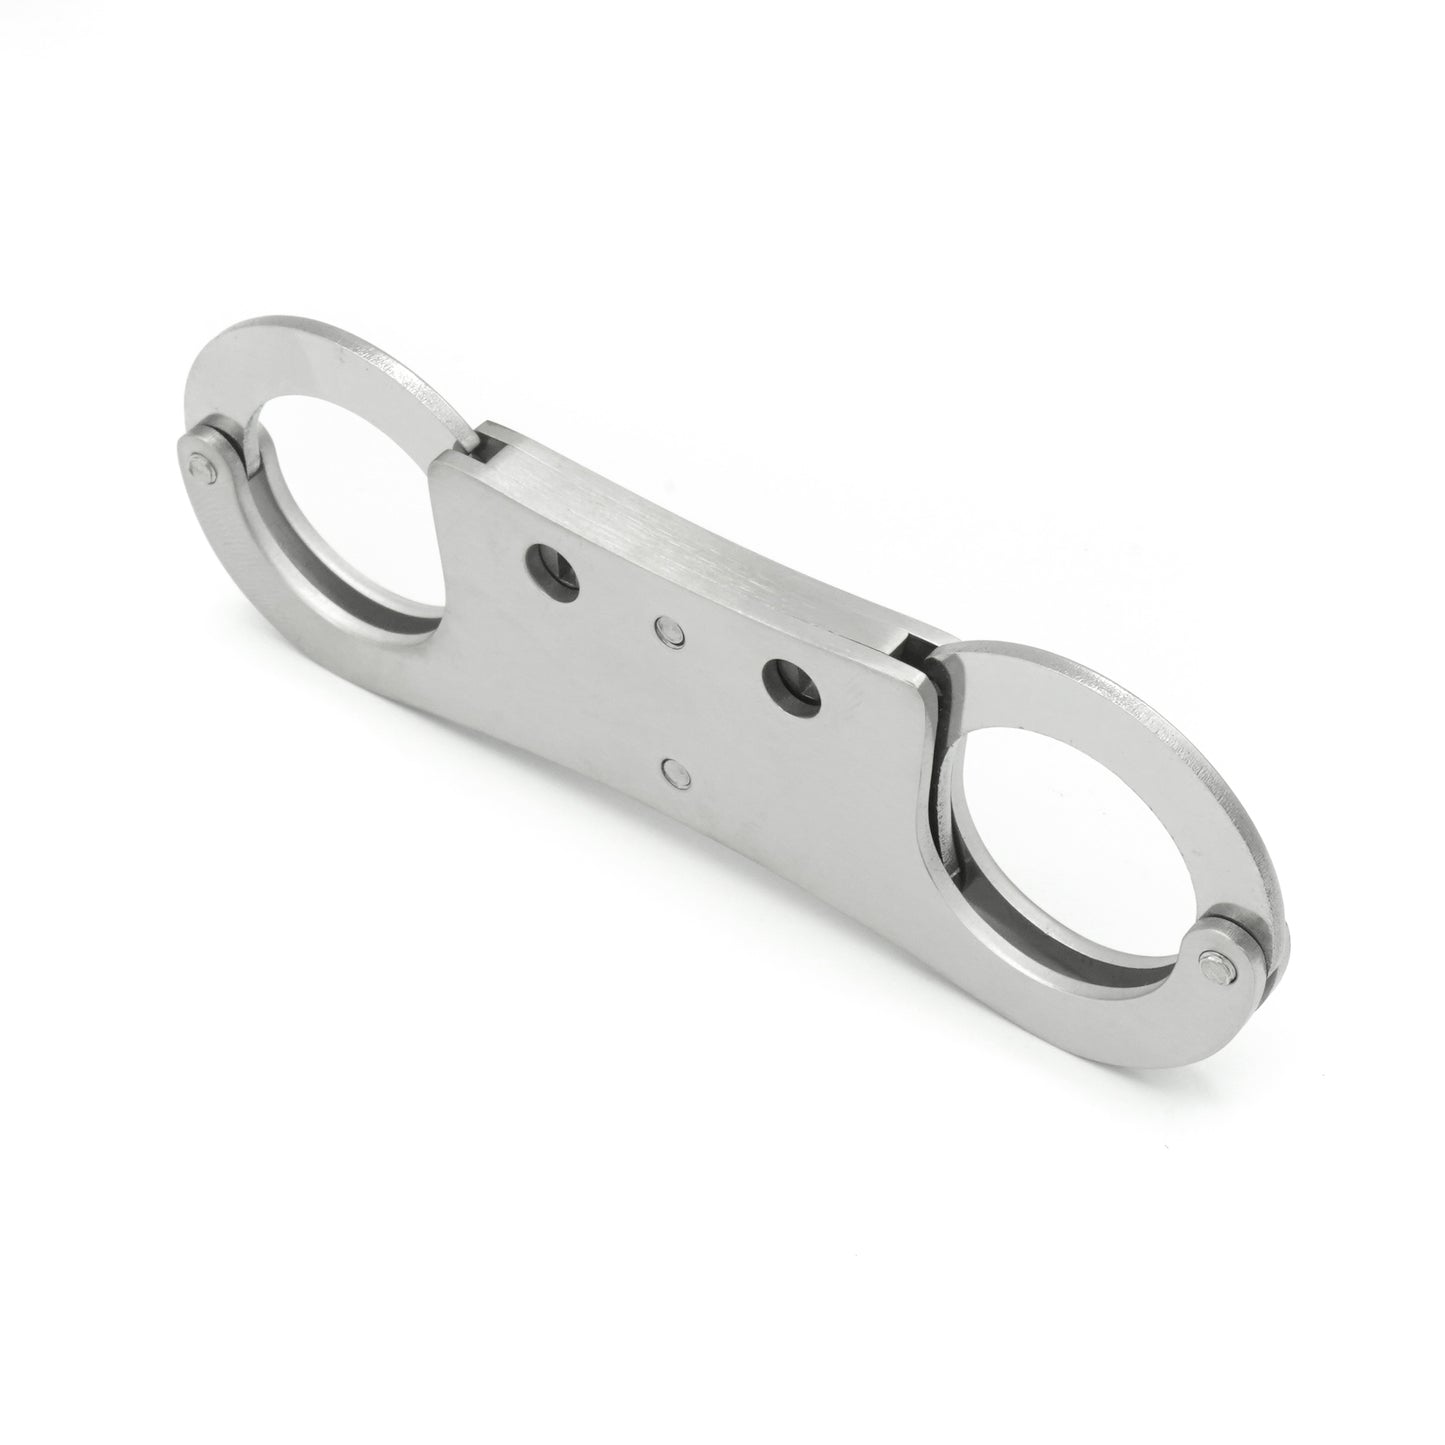 Premium stainless steel thumbcuffs